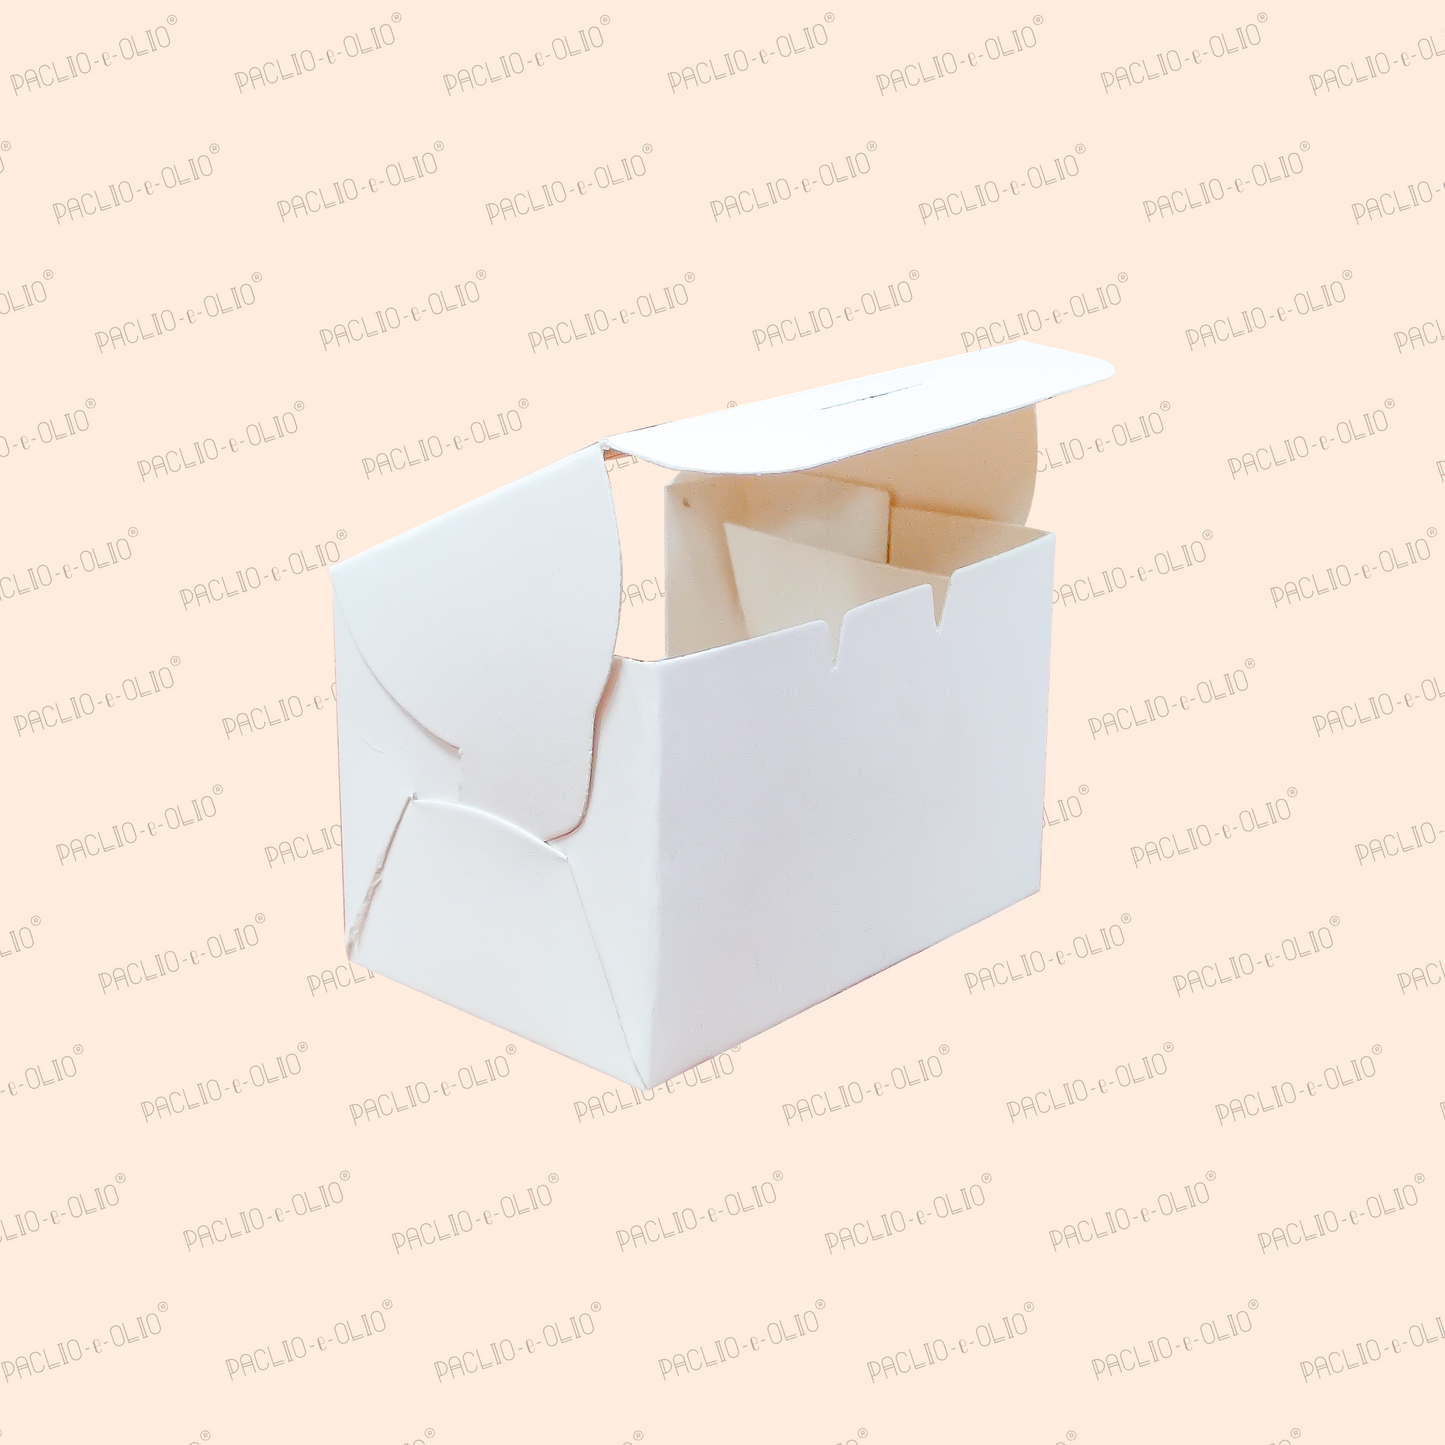 3 PIECES MACARON BOX (3X2X2 INCHES)